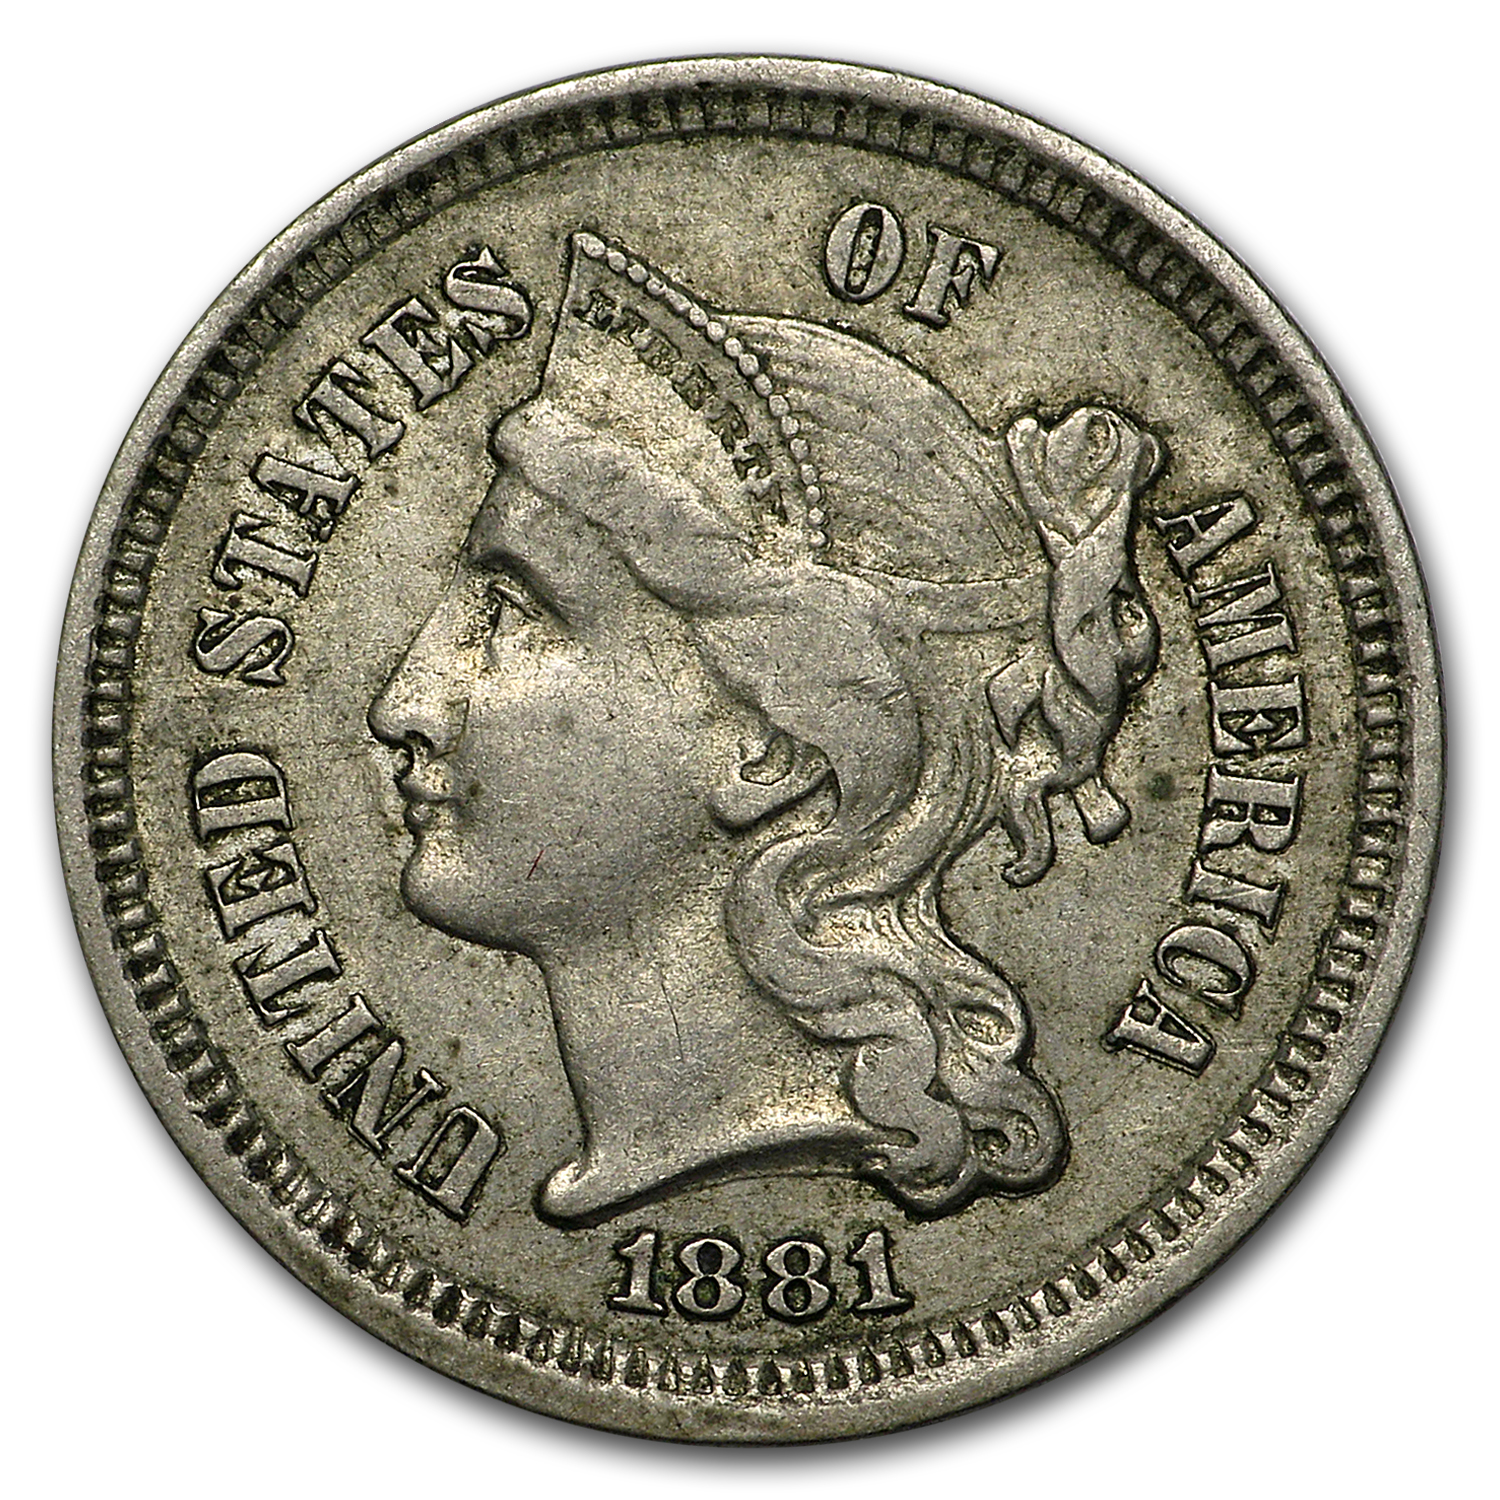 Buy 1881 3 Cent Nickel XF